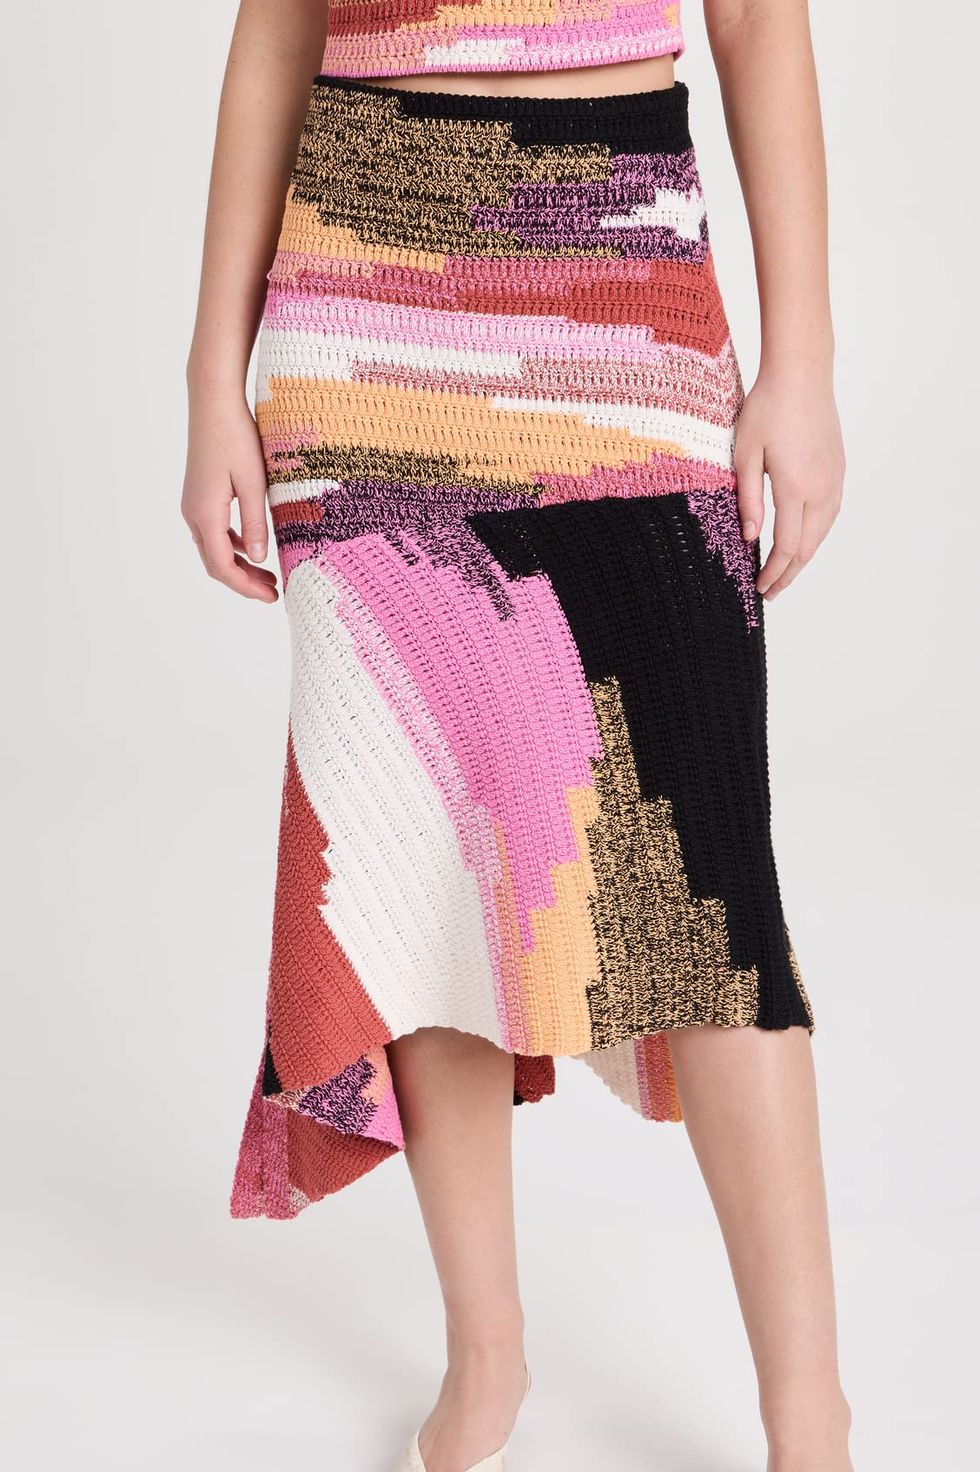 floral-print high-waisted skirt, FARM Rio